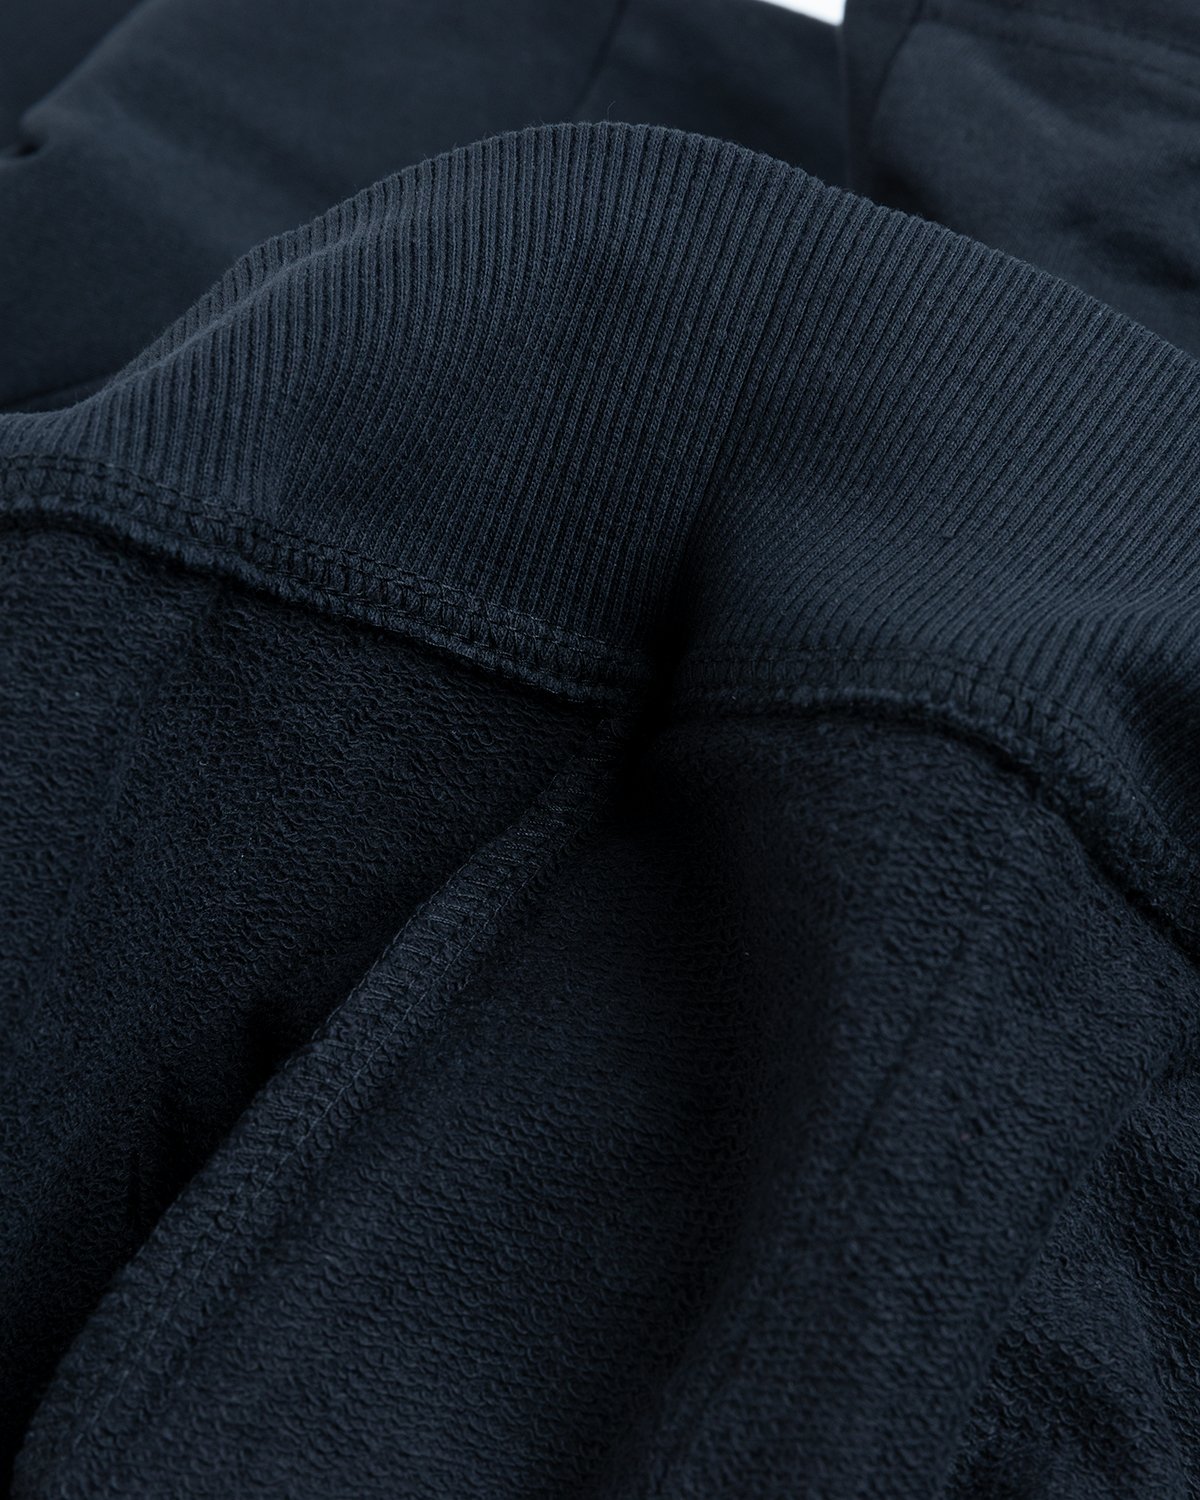 The North Face - Scrap Zip Hoodie Black - Clothing - Black - Image 4